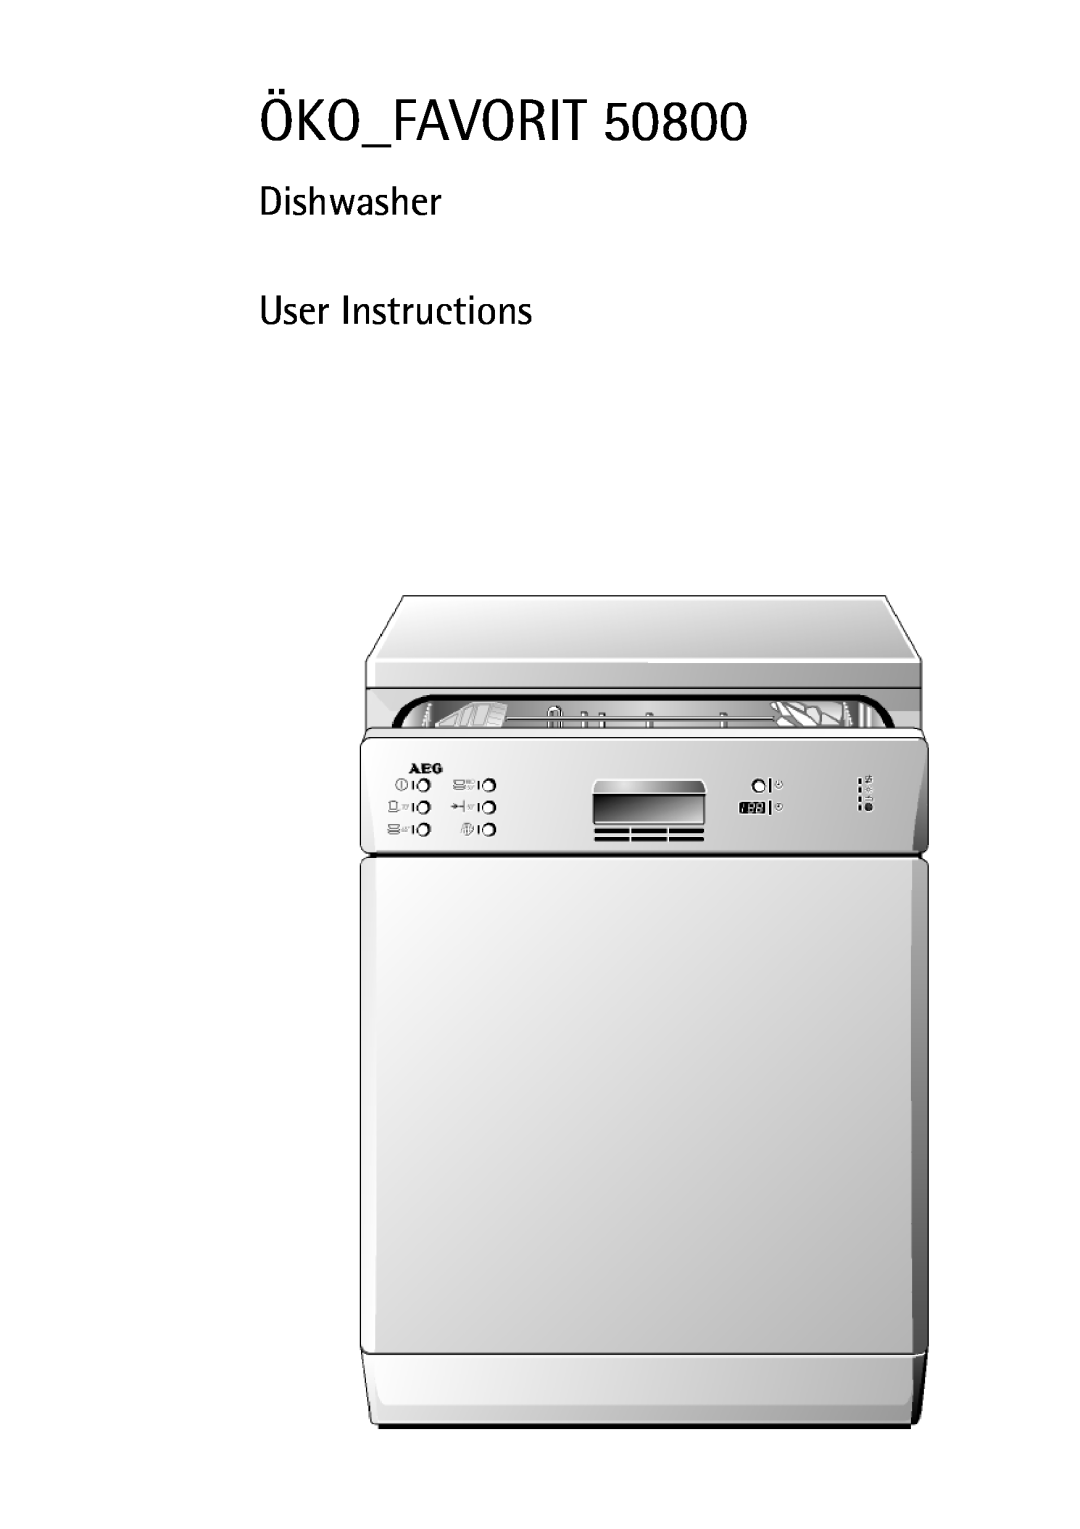 AEG 50800 manual Öko_Favorit, Dishwasher User Instructions 